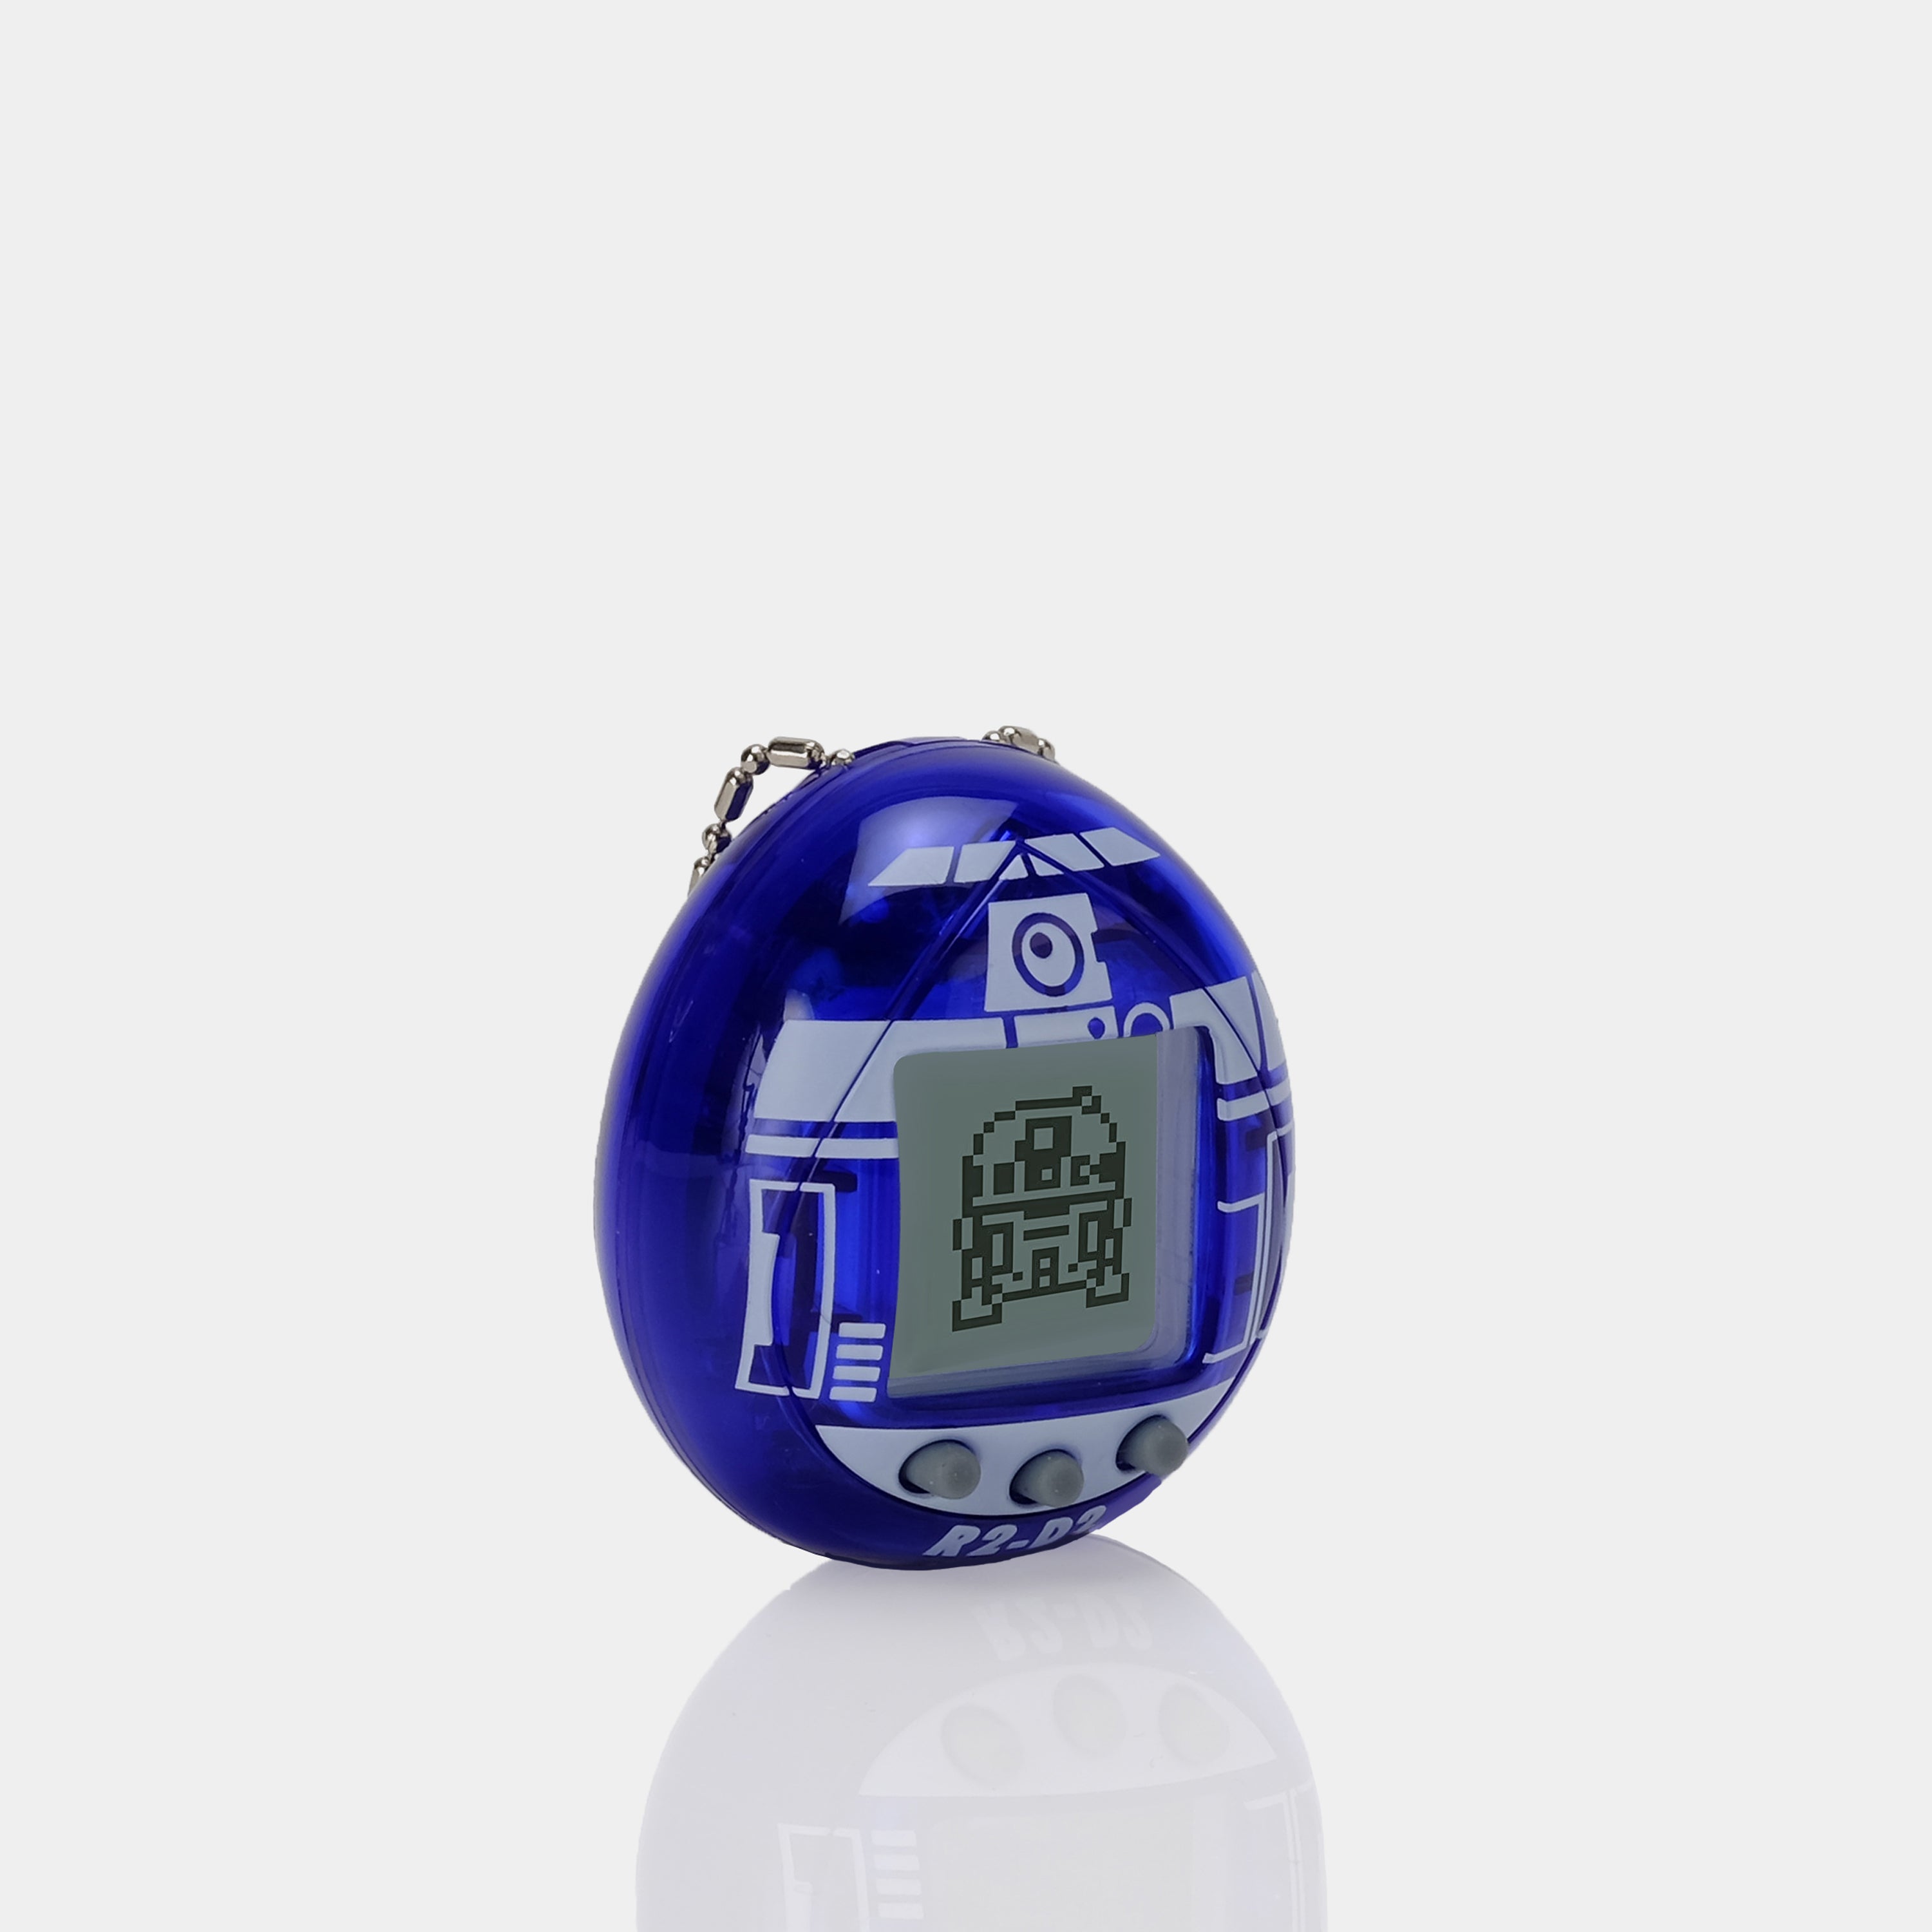 Star Wars R2-D2 Blue Tamagotchi